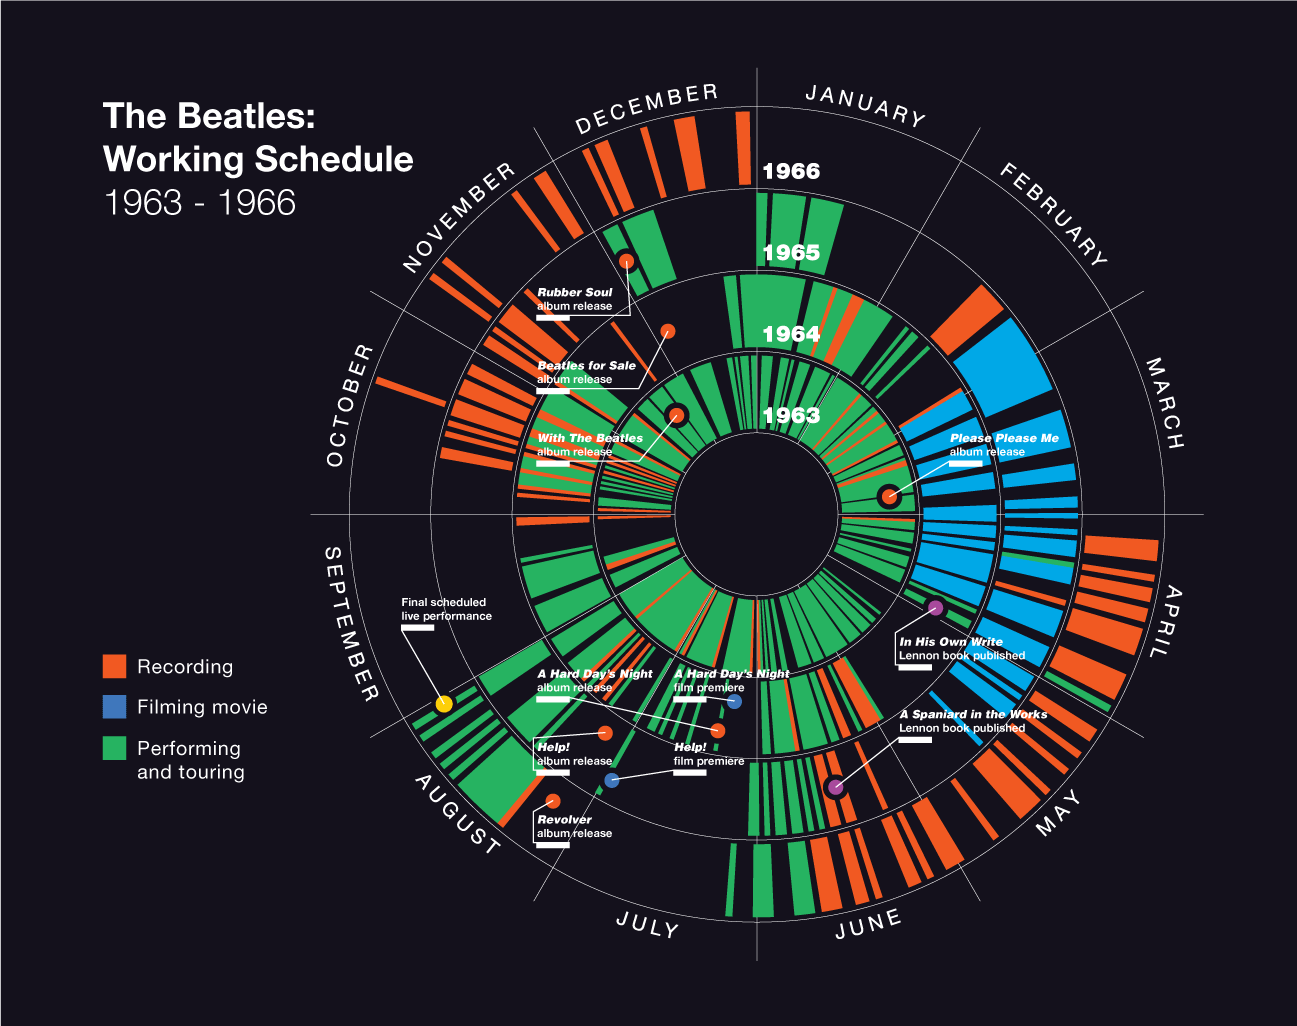 The Beatles: Working Schedule 1963-1966 Infographic